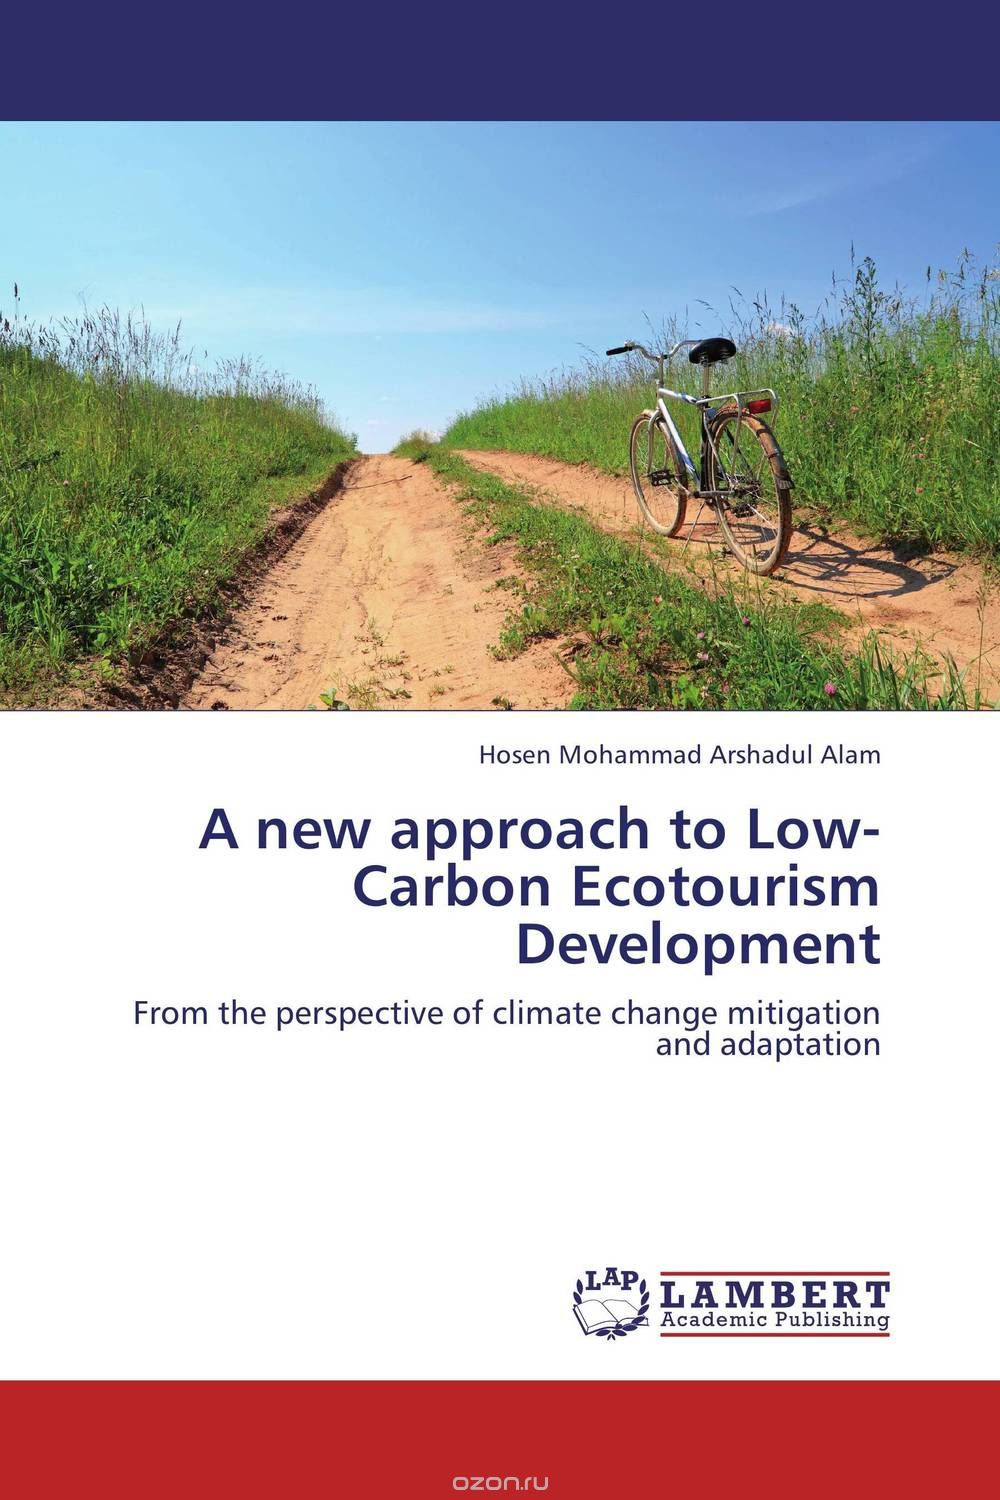 Скачать книгу "A new approach to Low-Carbon Ecotourism Development"